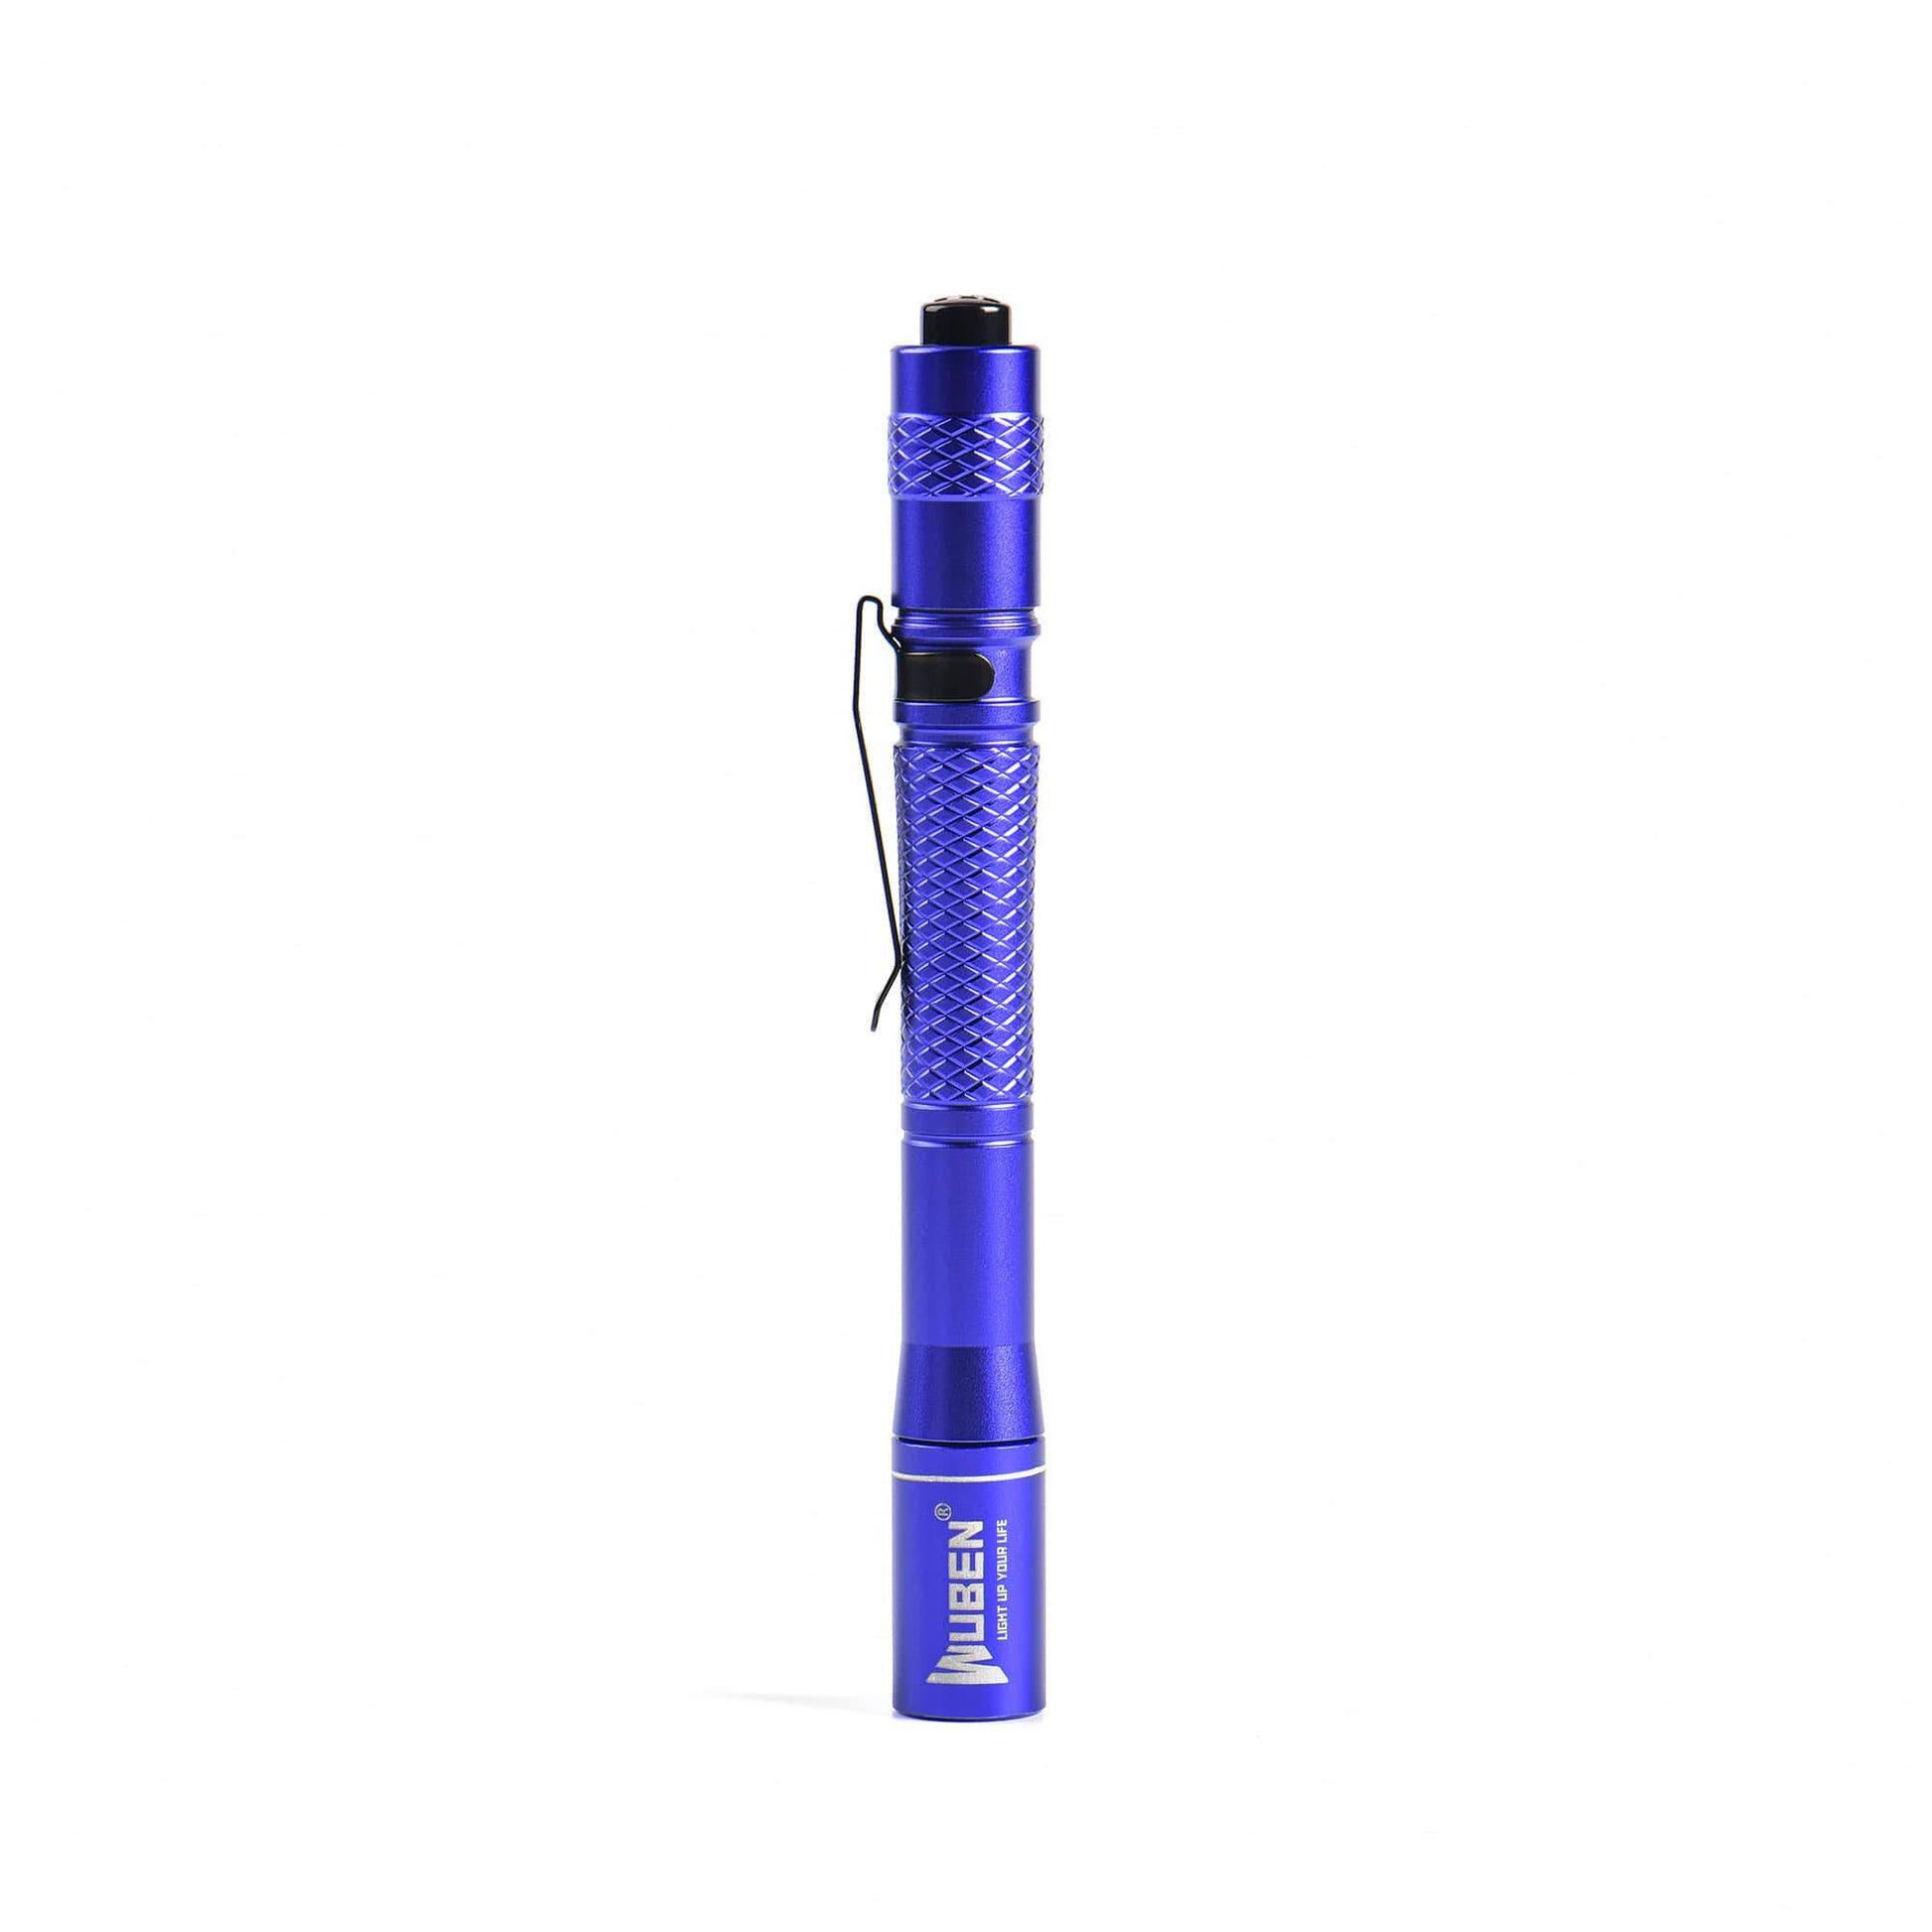 Wuben E19  UV LED Flashlight - Blueviolet-Front View